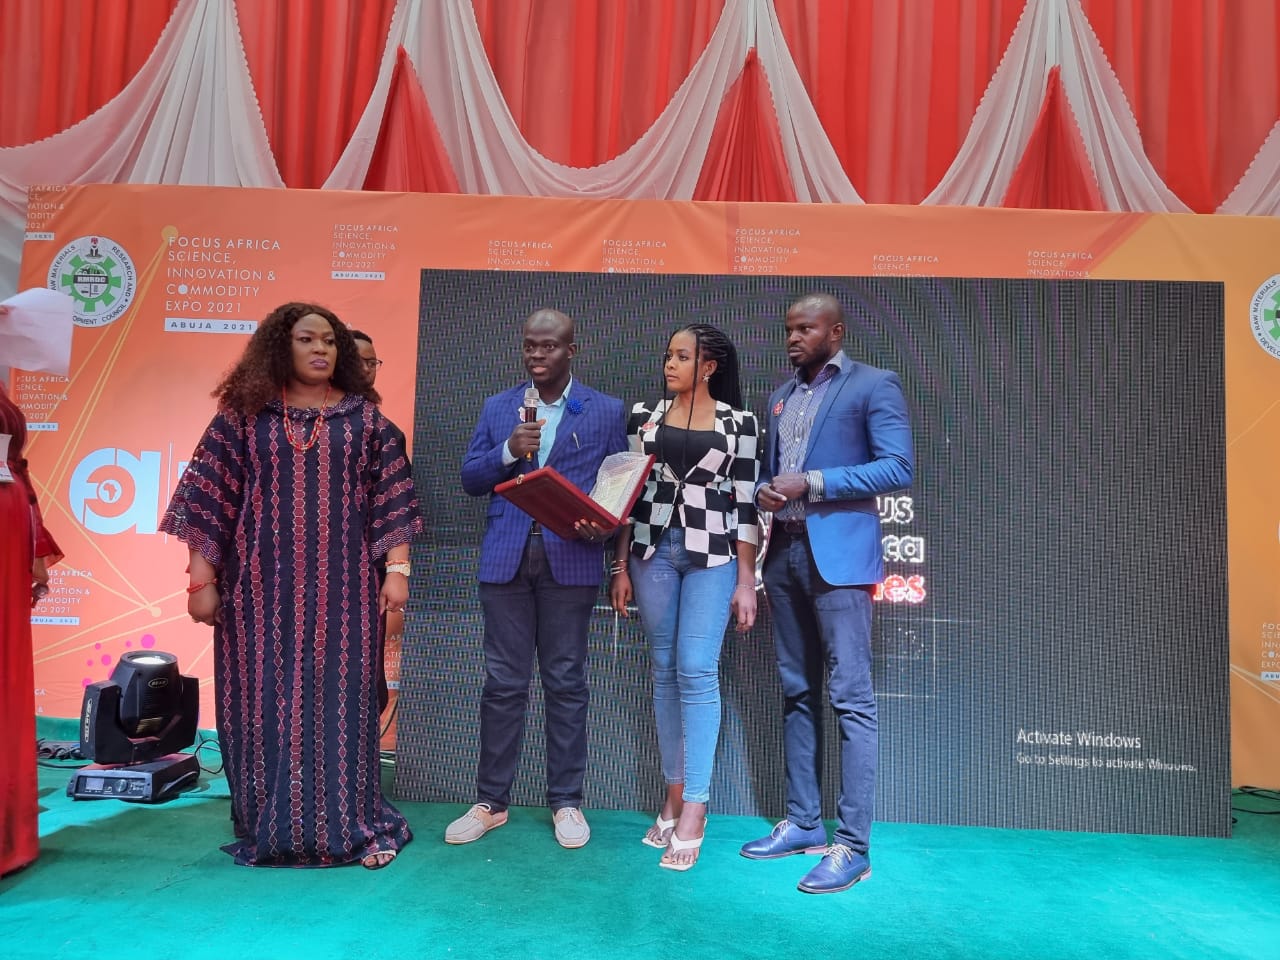 Softcity Team Wins Focus Africa Series Award